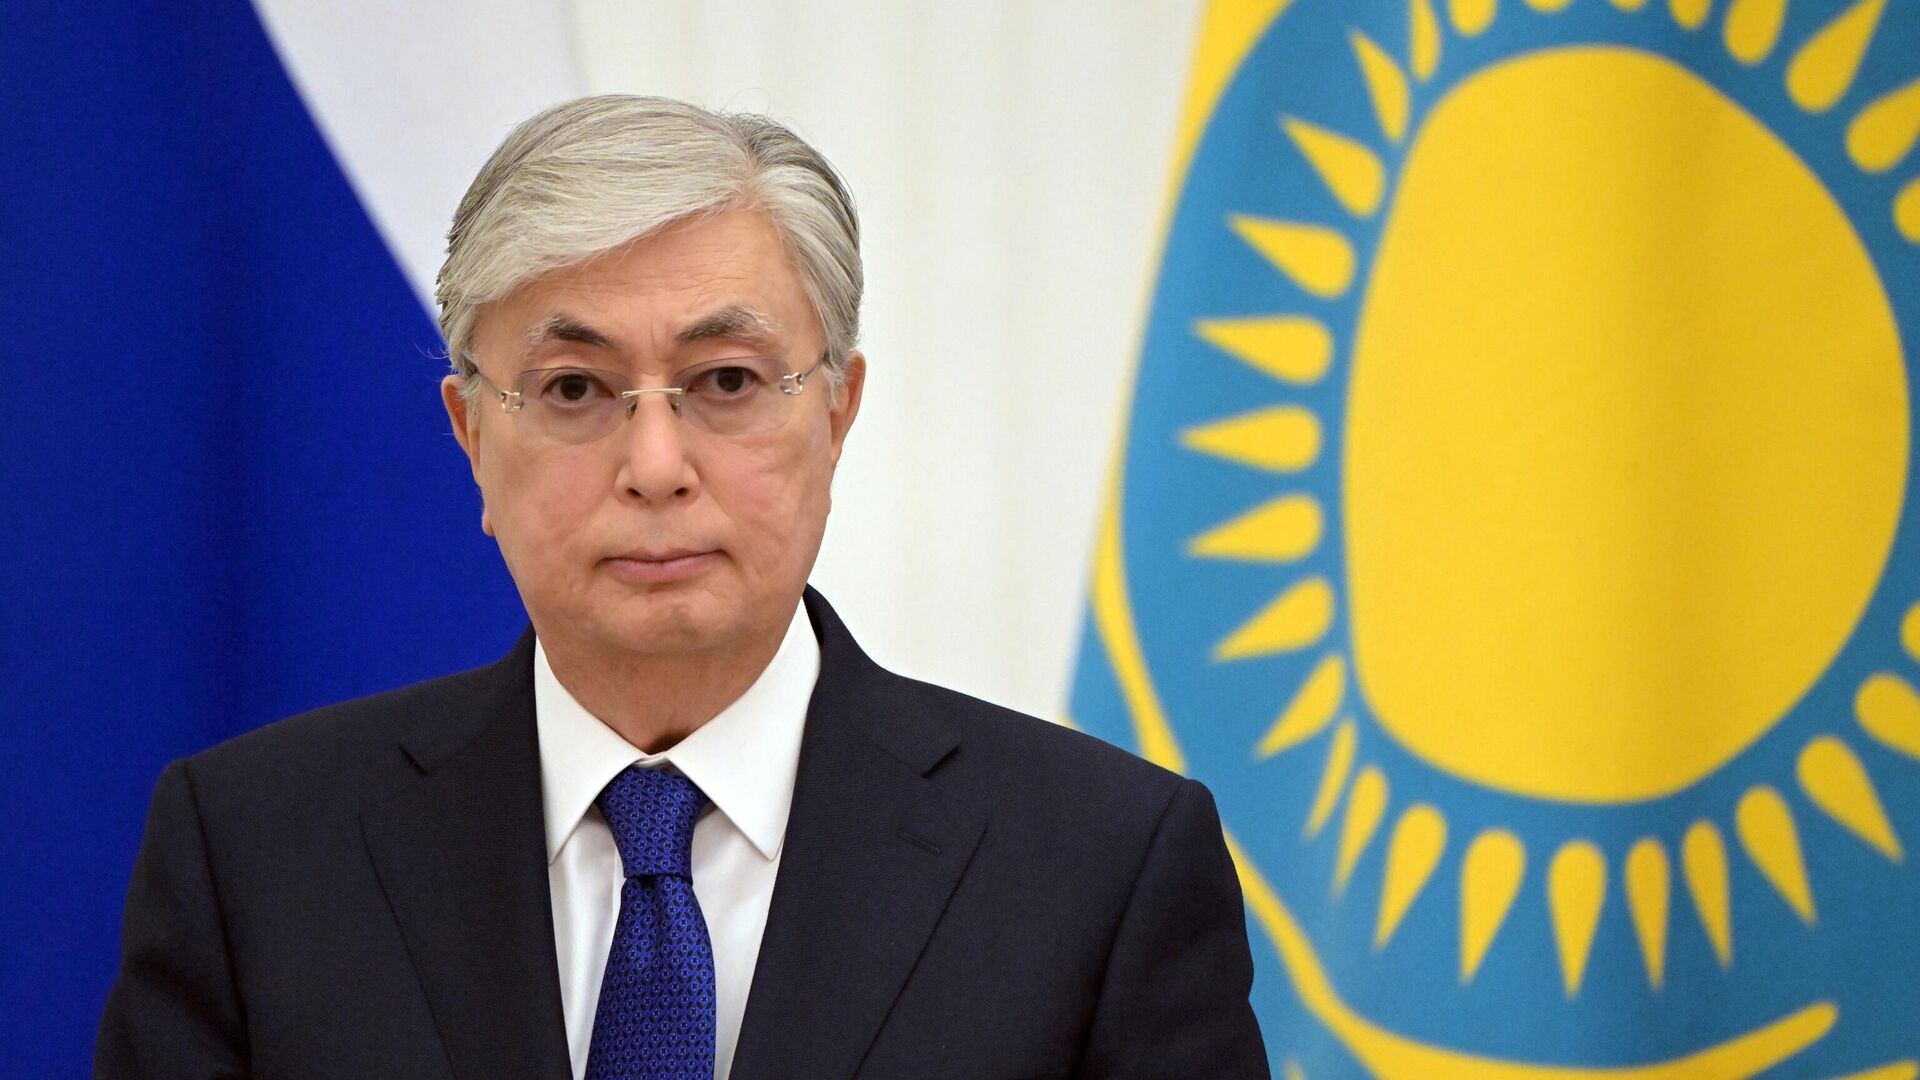 President of Kazakhstan to attend SPIEF